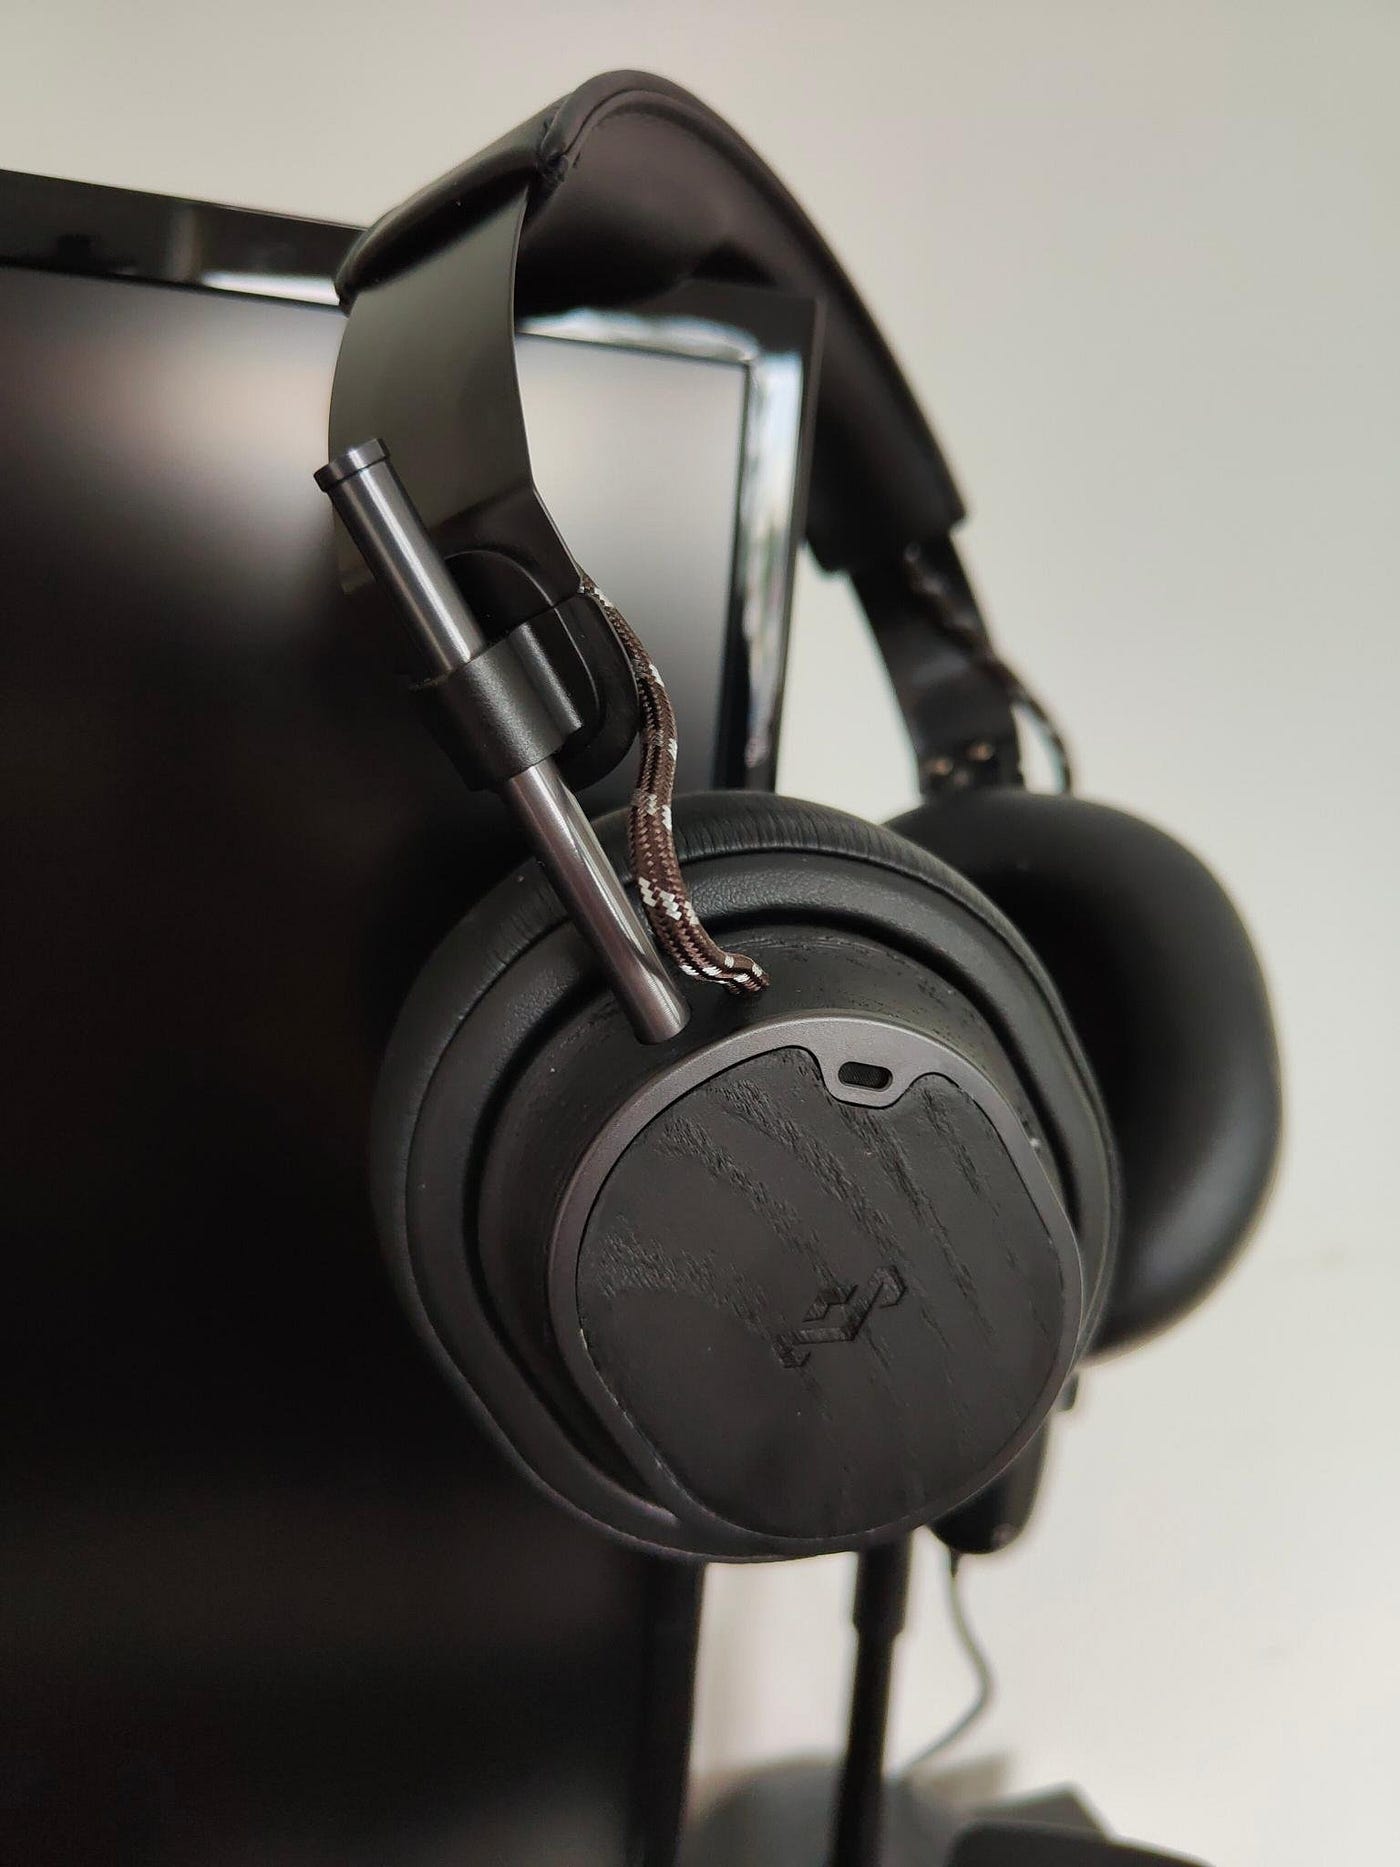 Marley Exodus ANC Wireless Headphones Review | by Sandeep Kumar | Medium